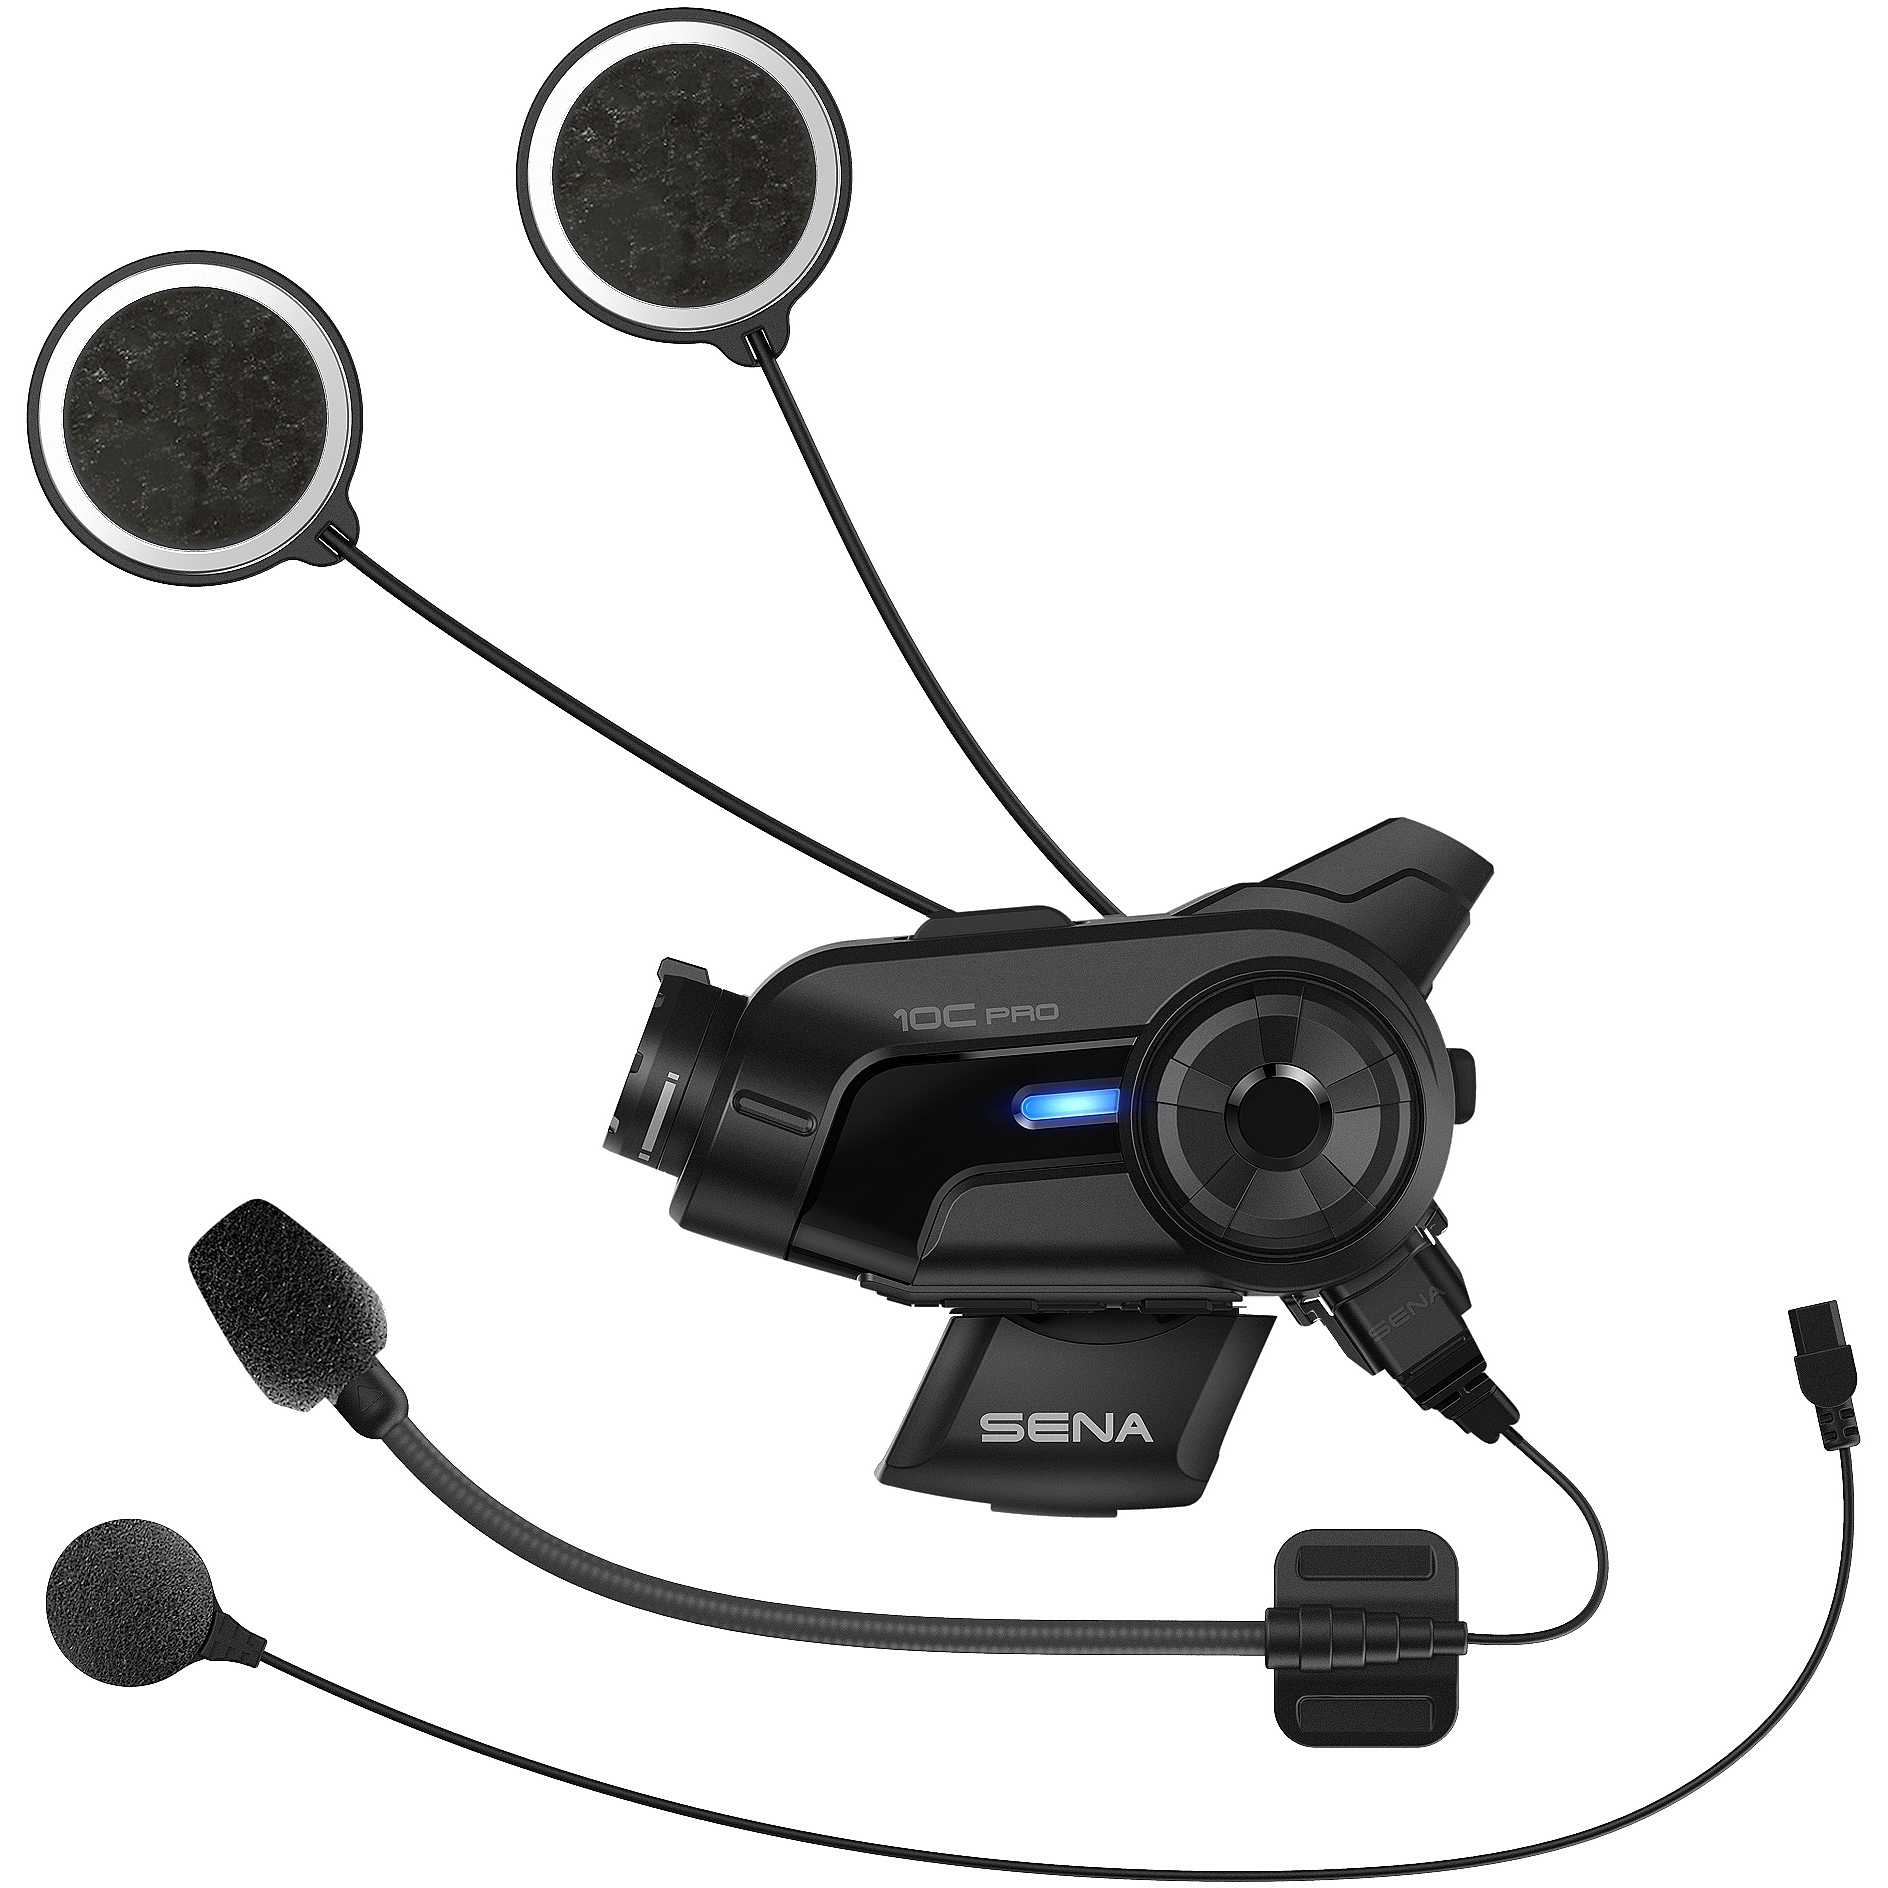 Bluetooth Intercom Moto Sena 10c pro With Integrated Camera For Sale Online  